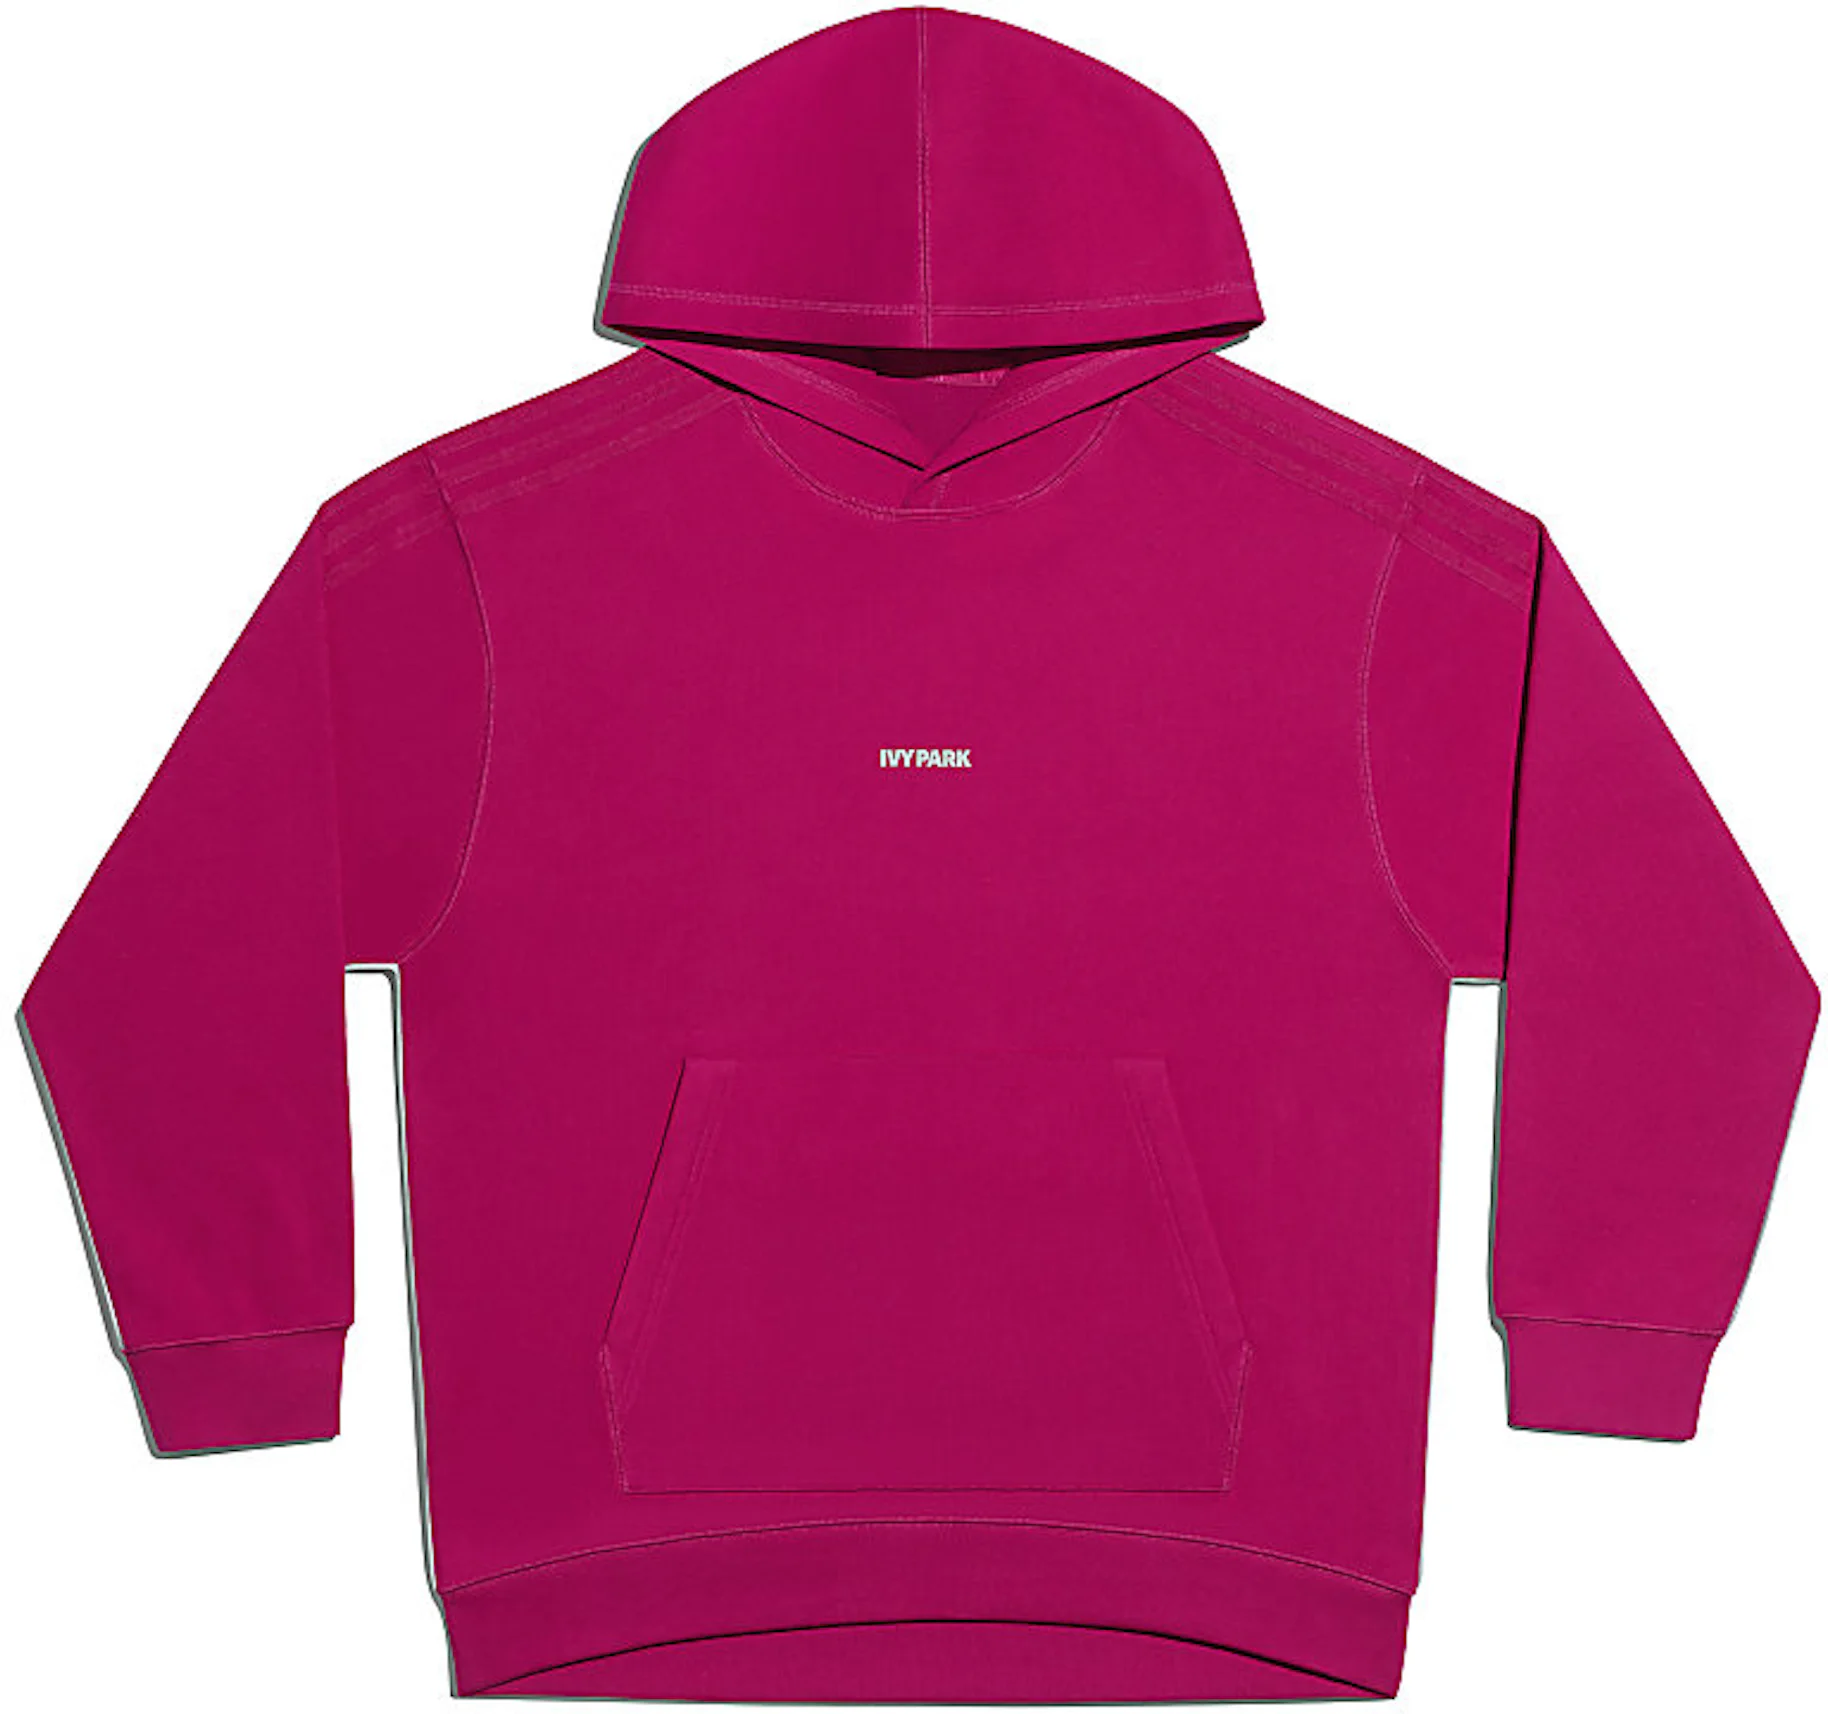 Adidas X Ivy Park Cargo Hoodie Bold Pink All Gender HD4821 Sweatshirt Size M